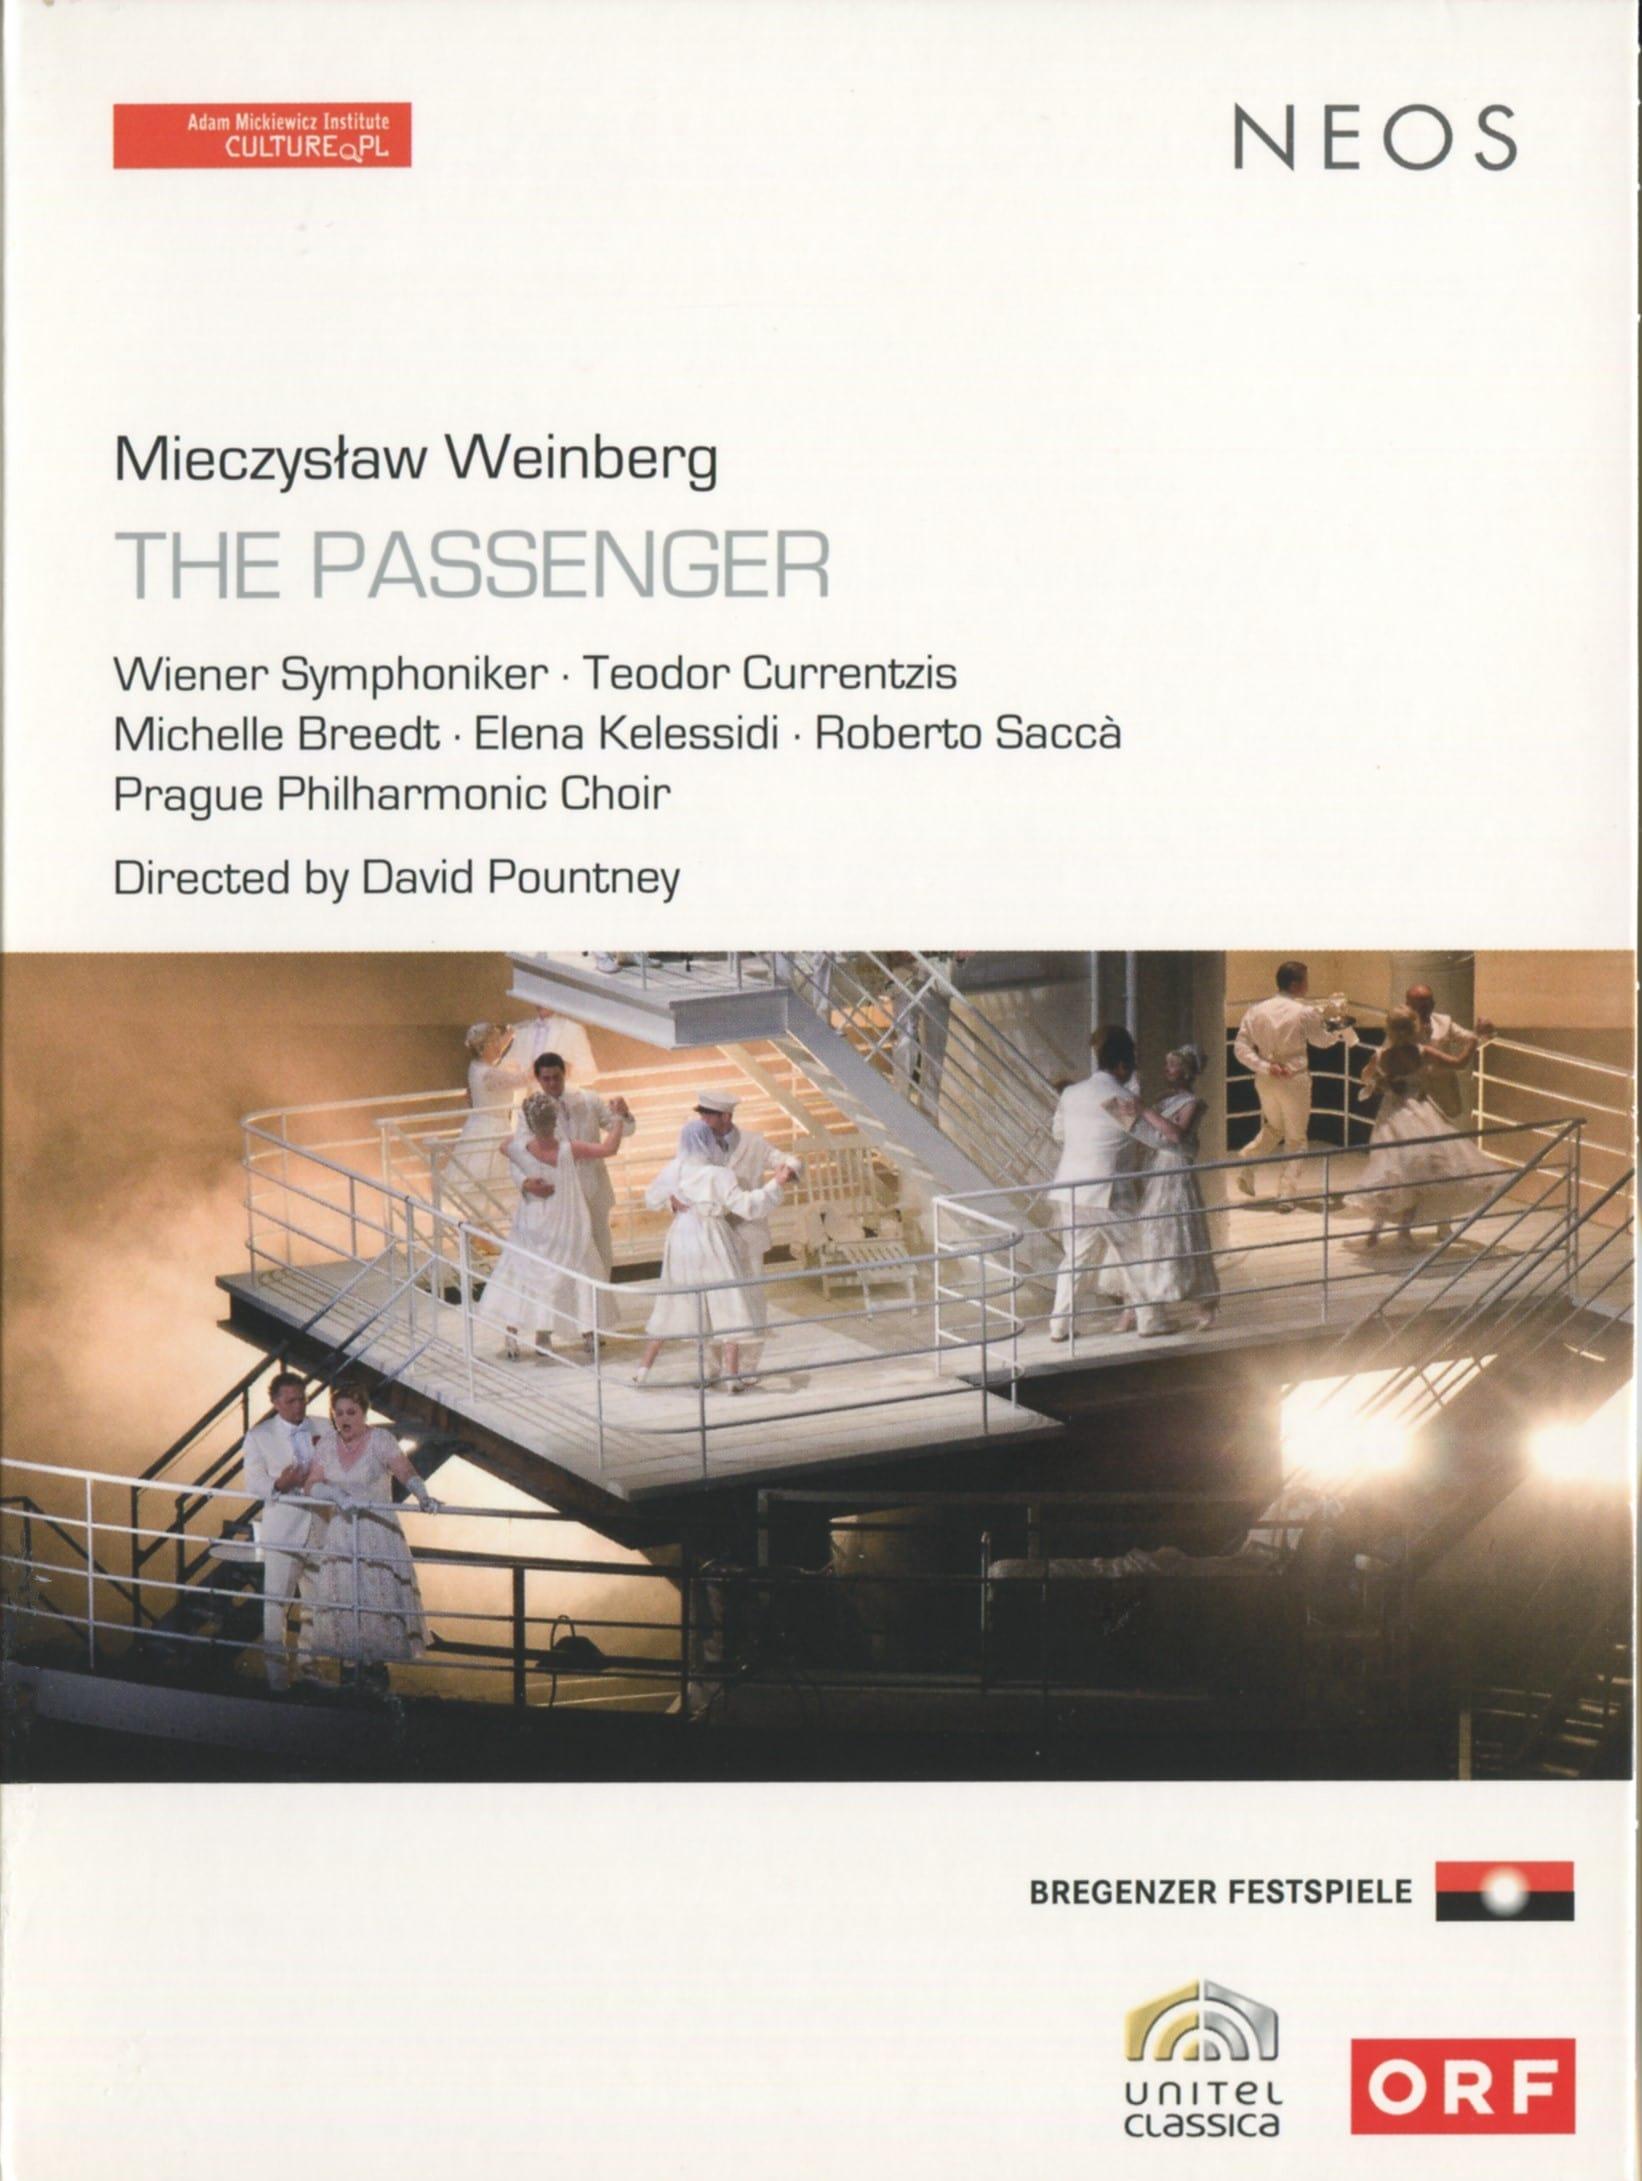 Mieczysław Weinberg: The Passenger poster